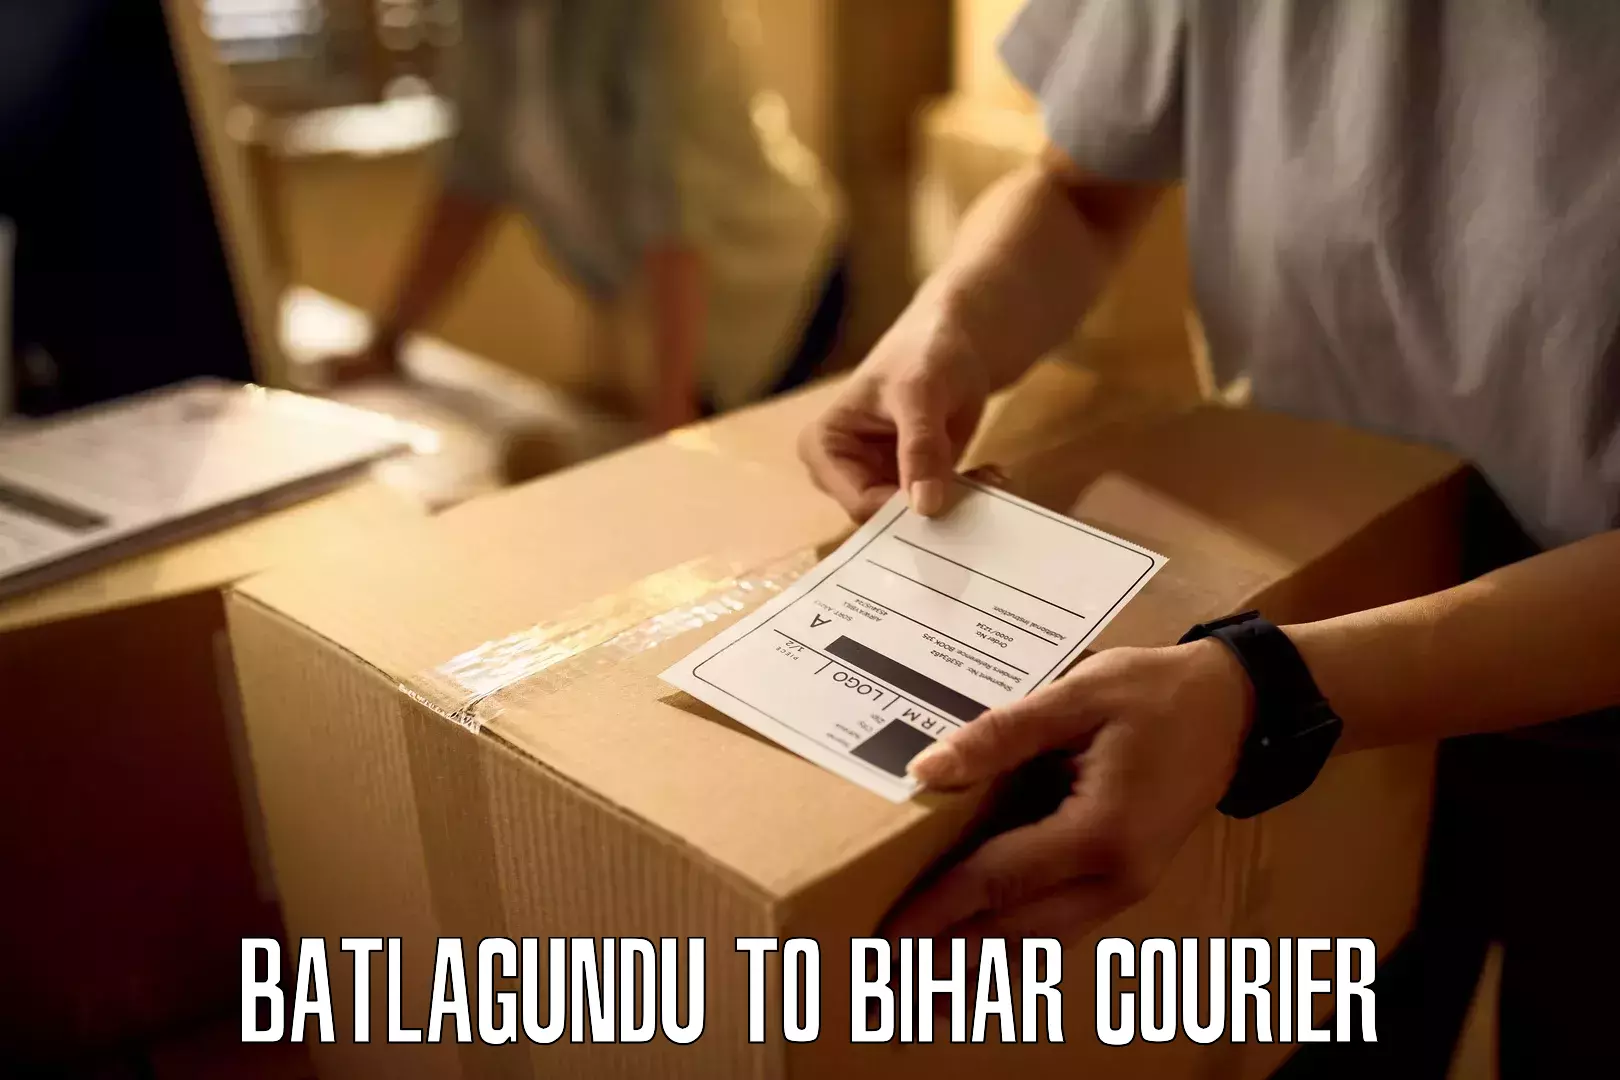 Easy access courier services Batlagundu to Biraul